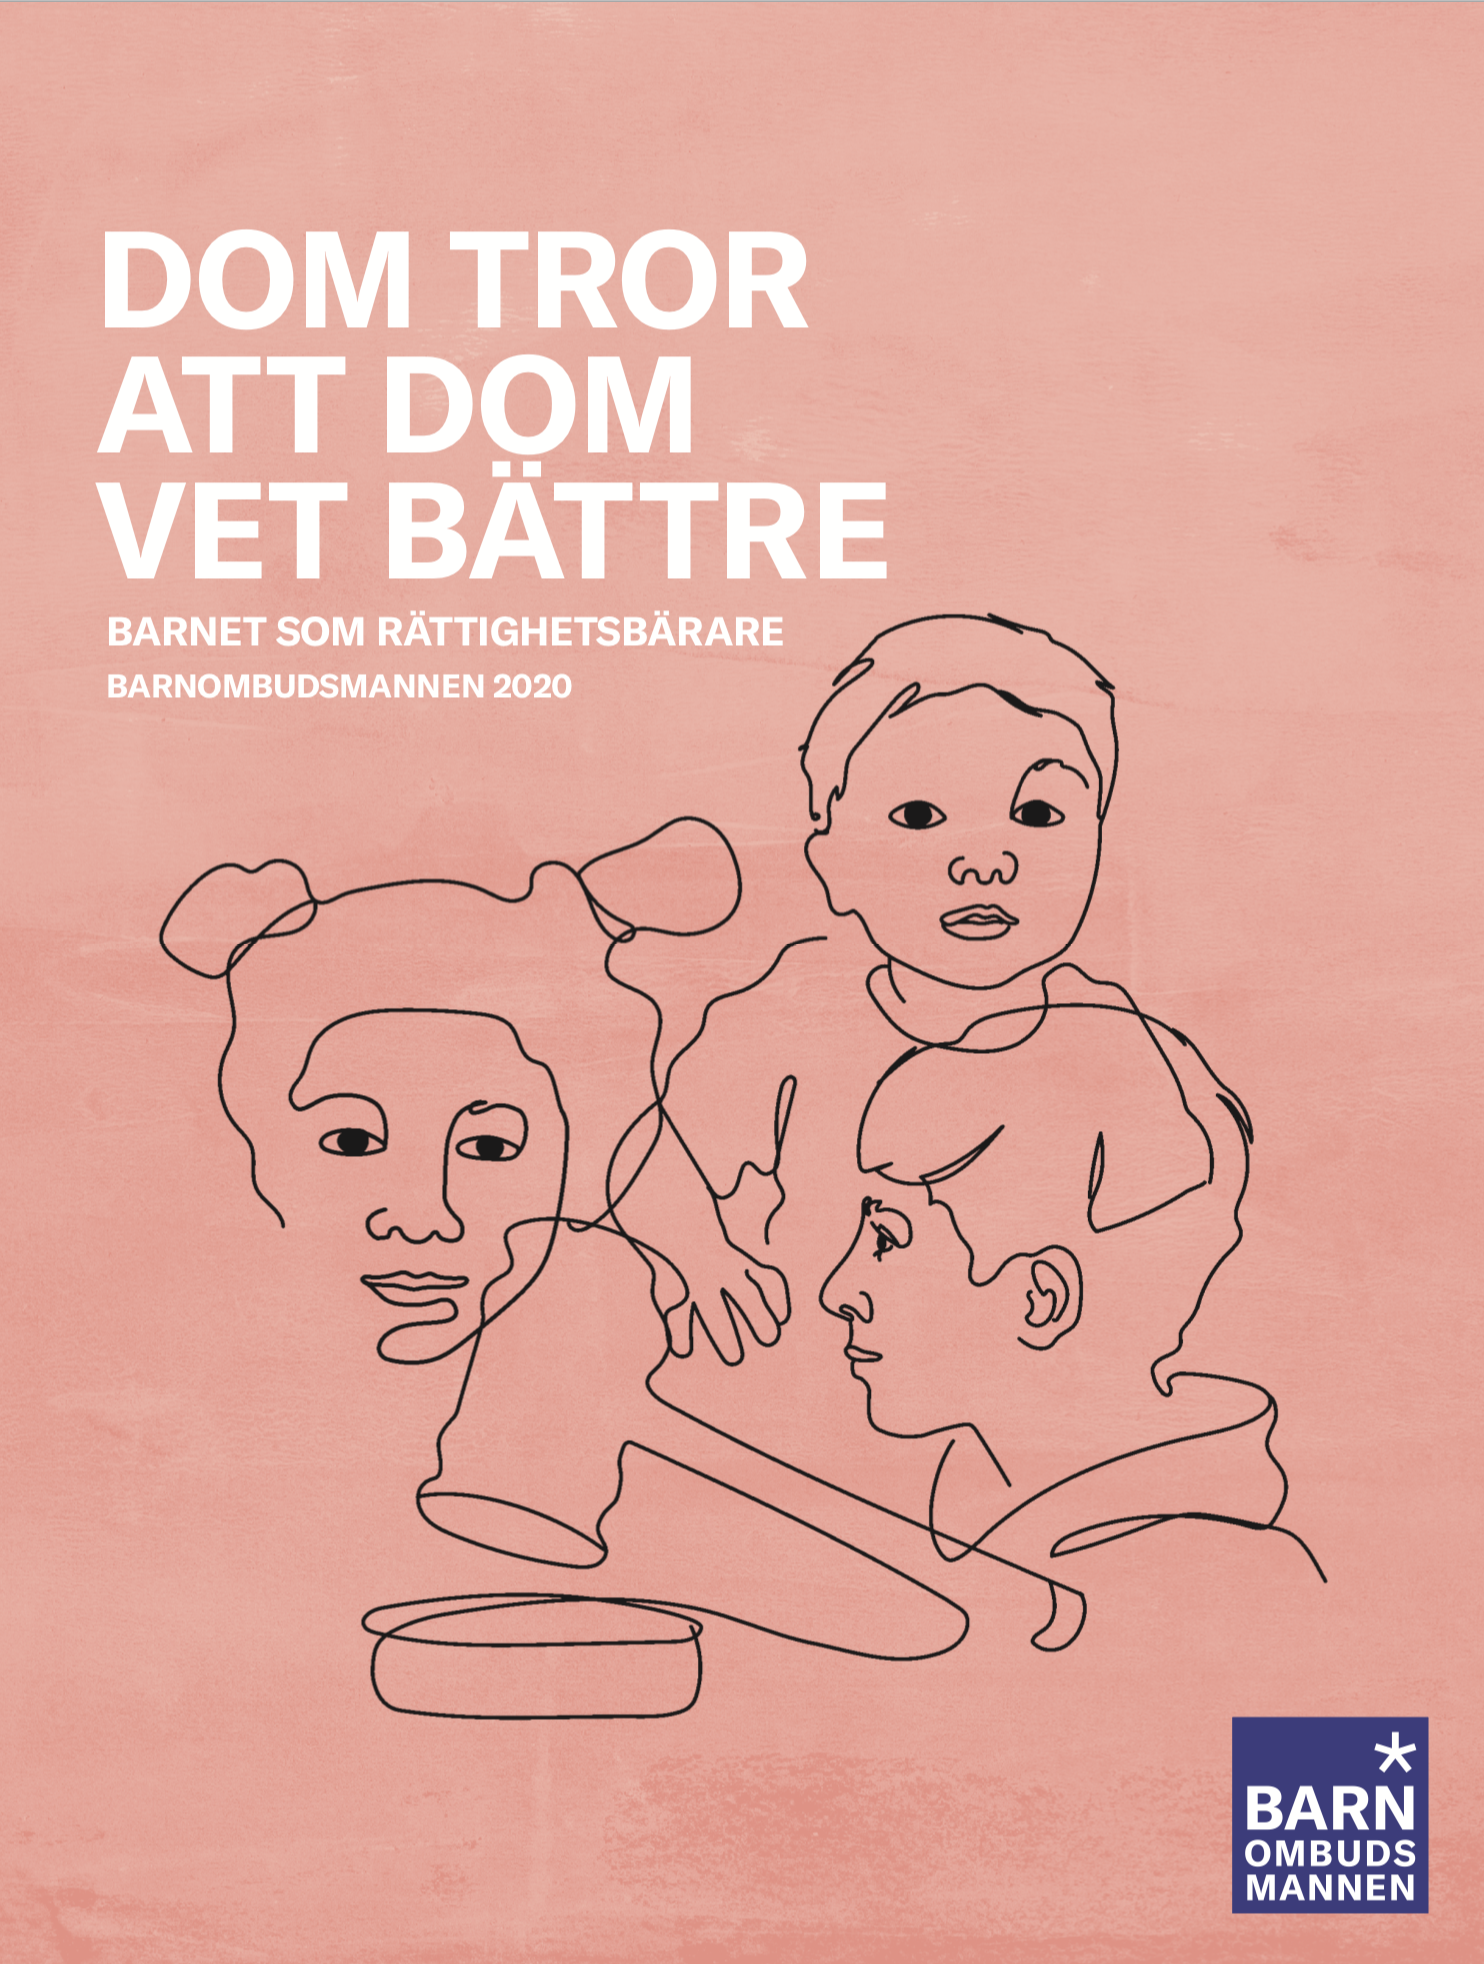 christina-heitmann-illustration-barnombudsmannen-annual+report.png